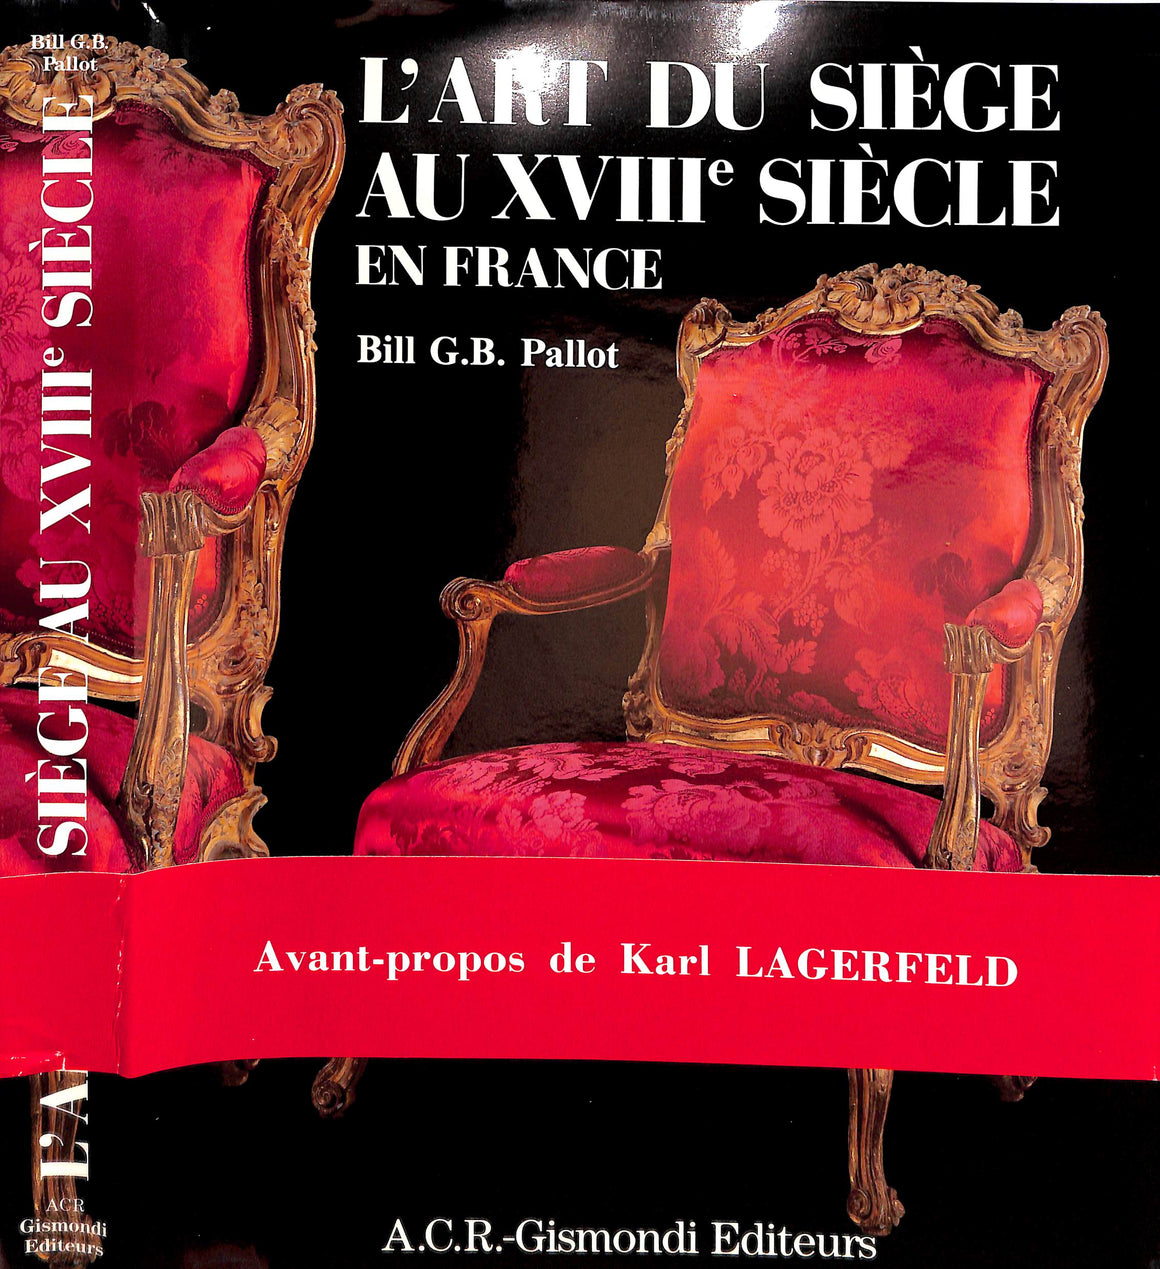 "L'Art Du Siege Au XVIII Siecle En France" 1987 PALLOT, Bill G.B.